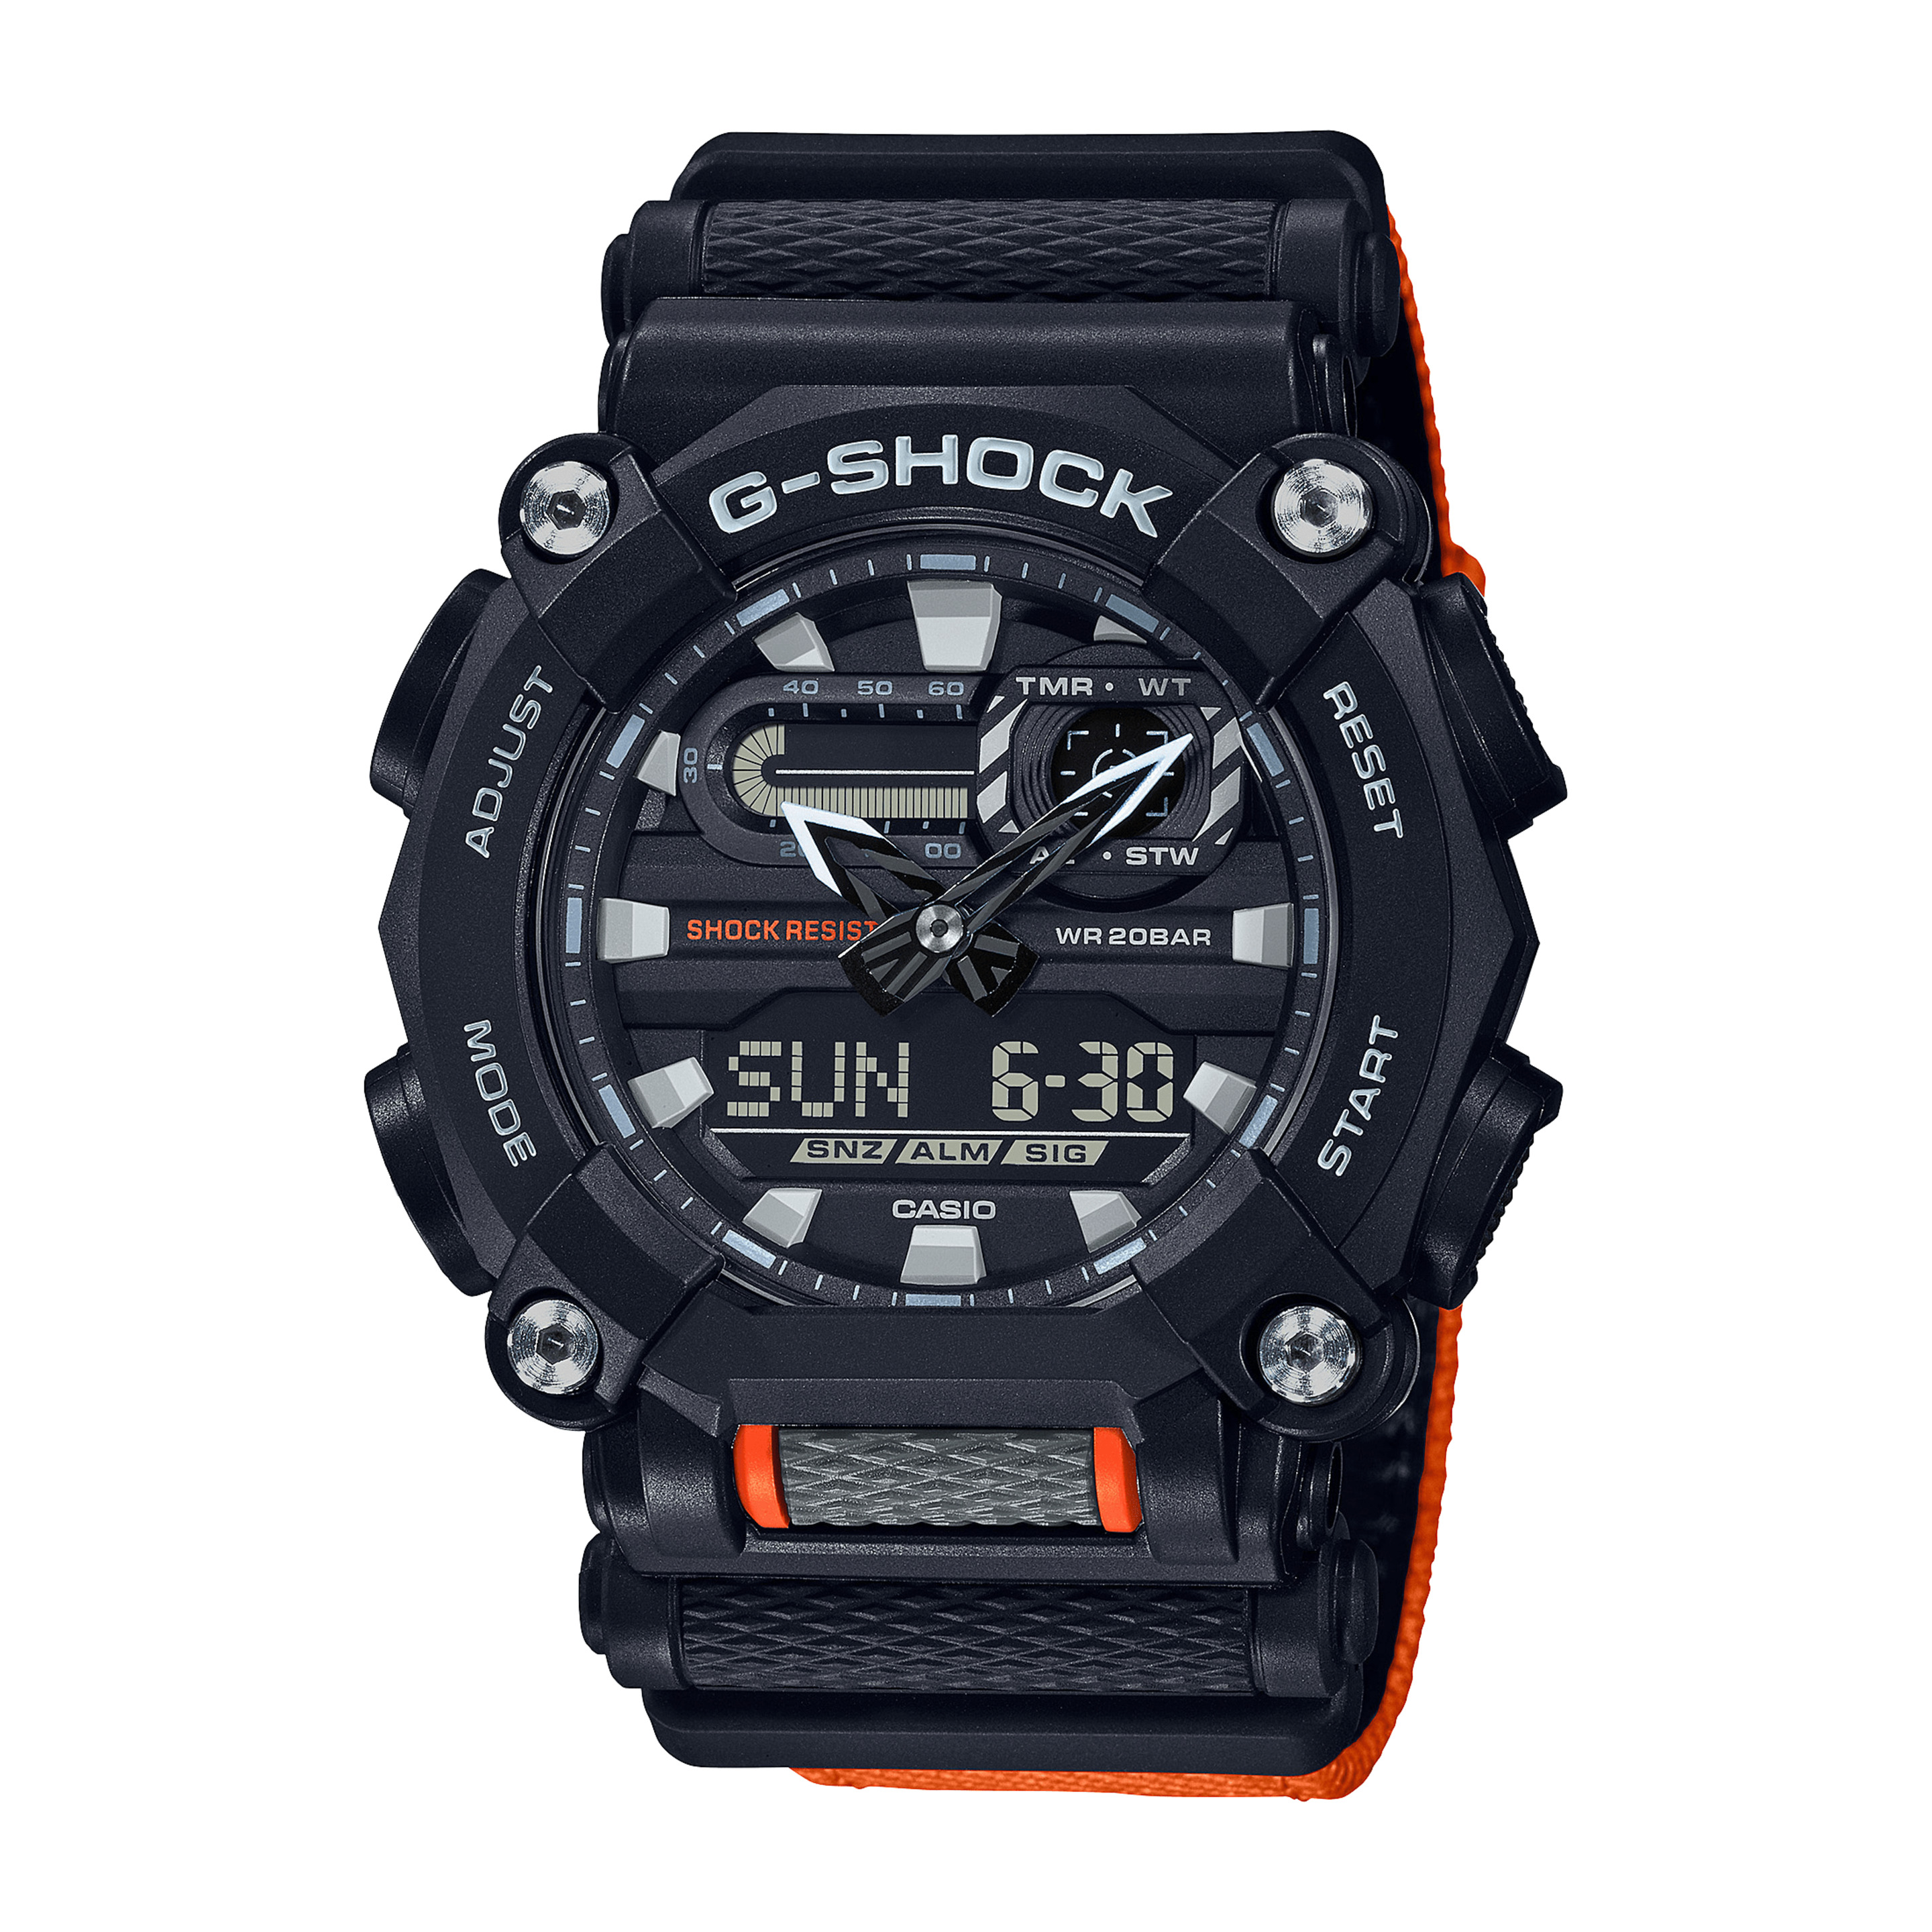 Reloj G-shock Ga-900c-1a4er - negro-naranja - 